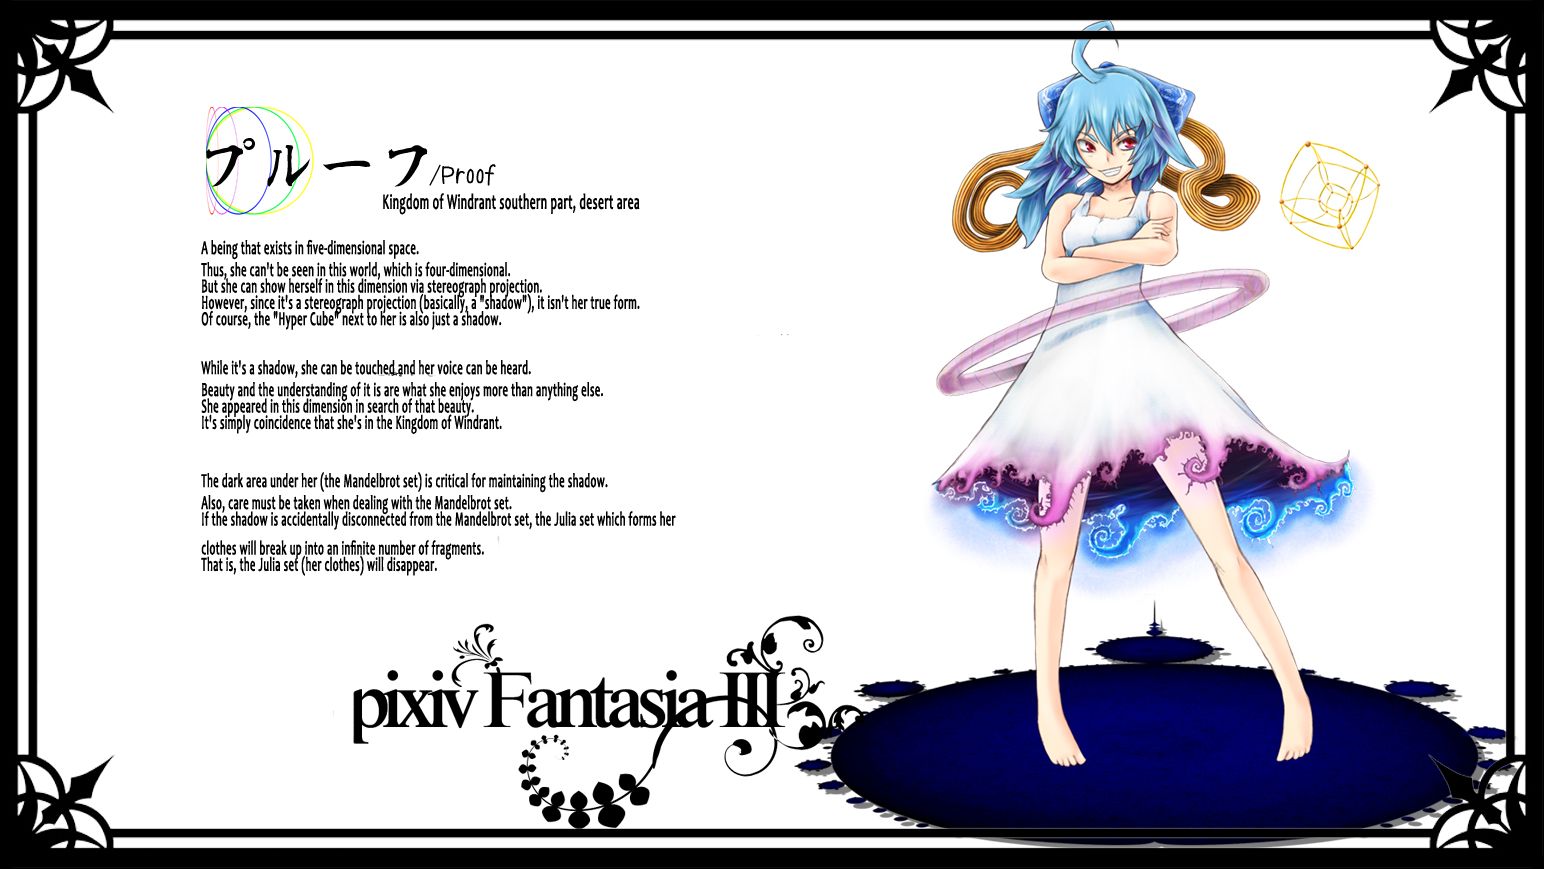 anime, pixiv fantasia iii